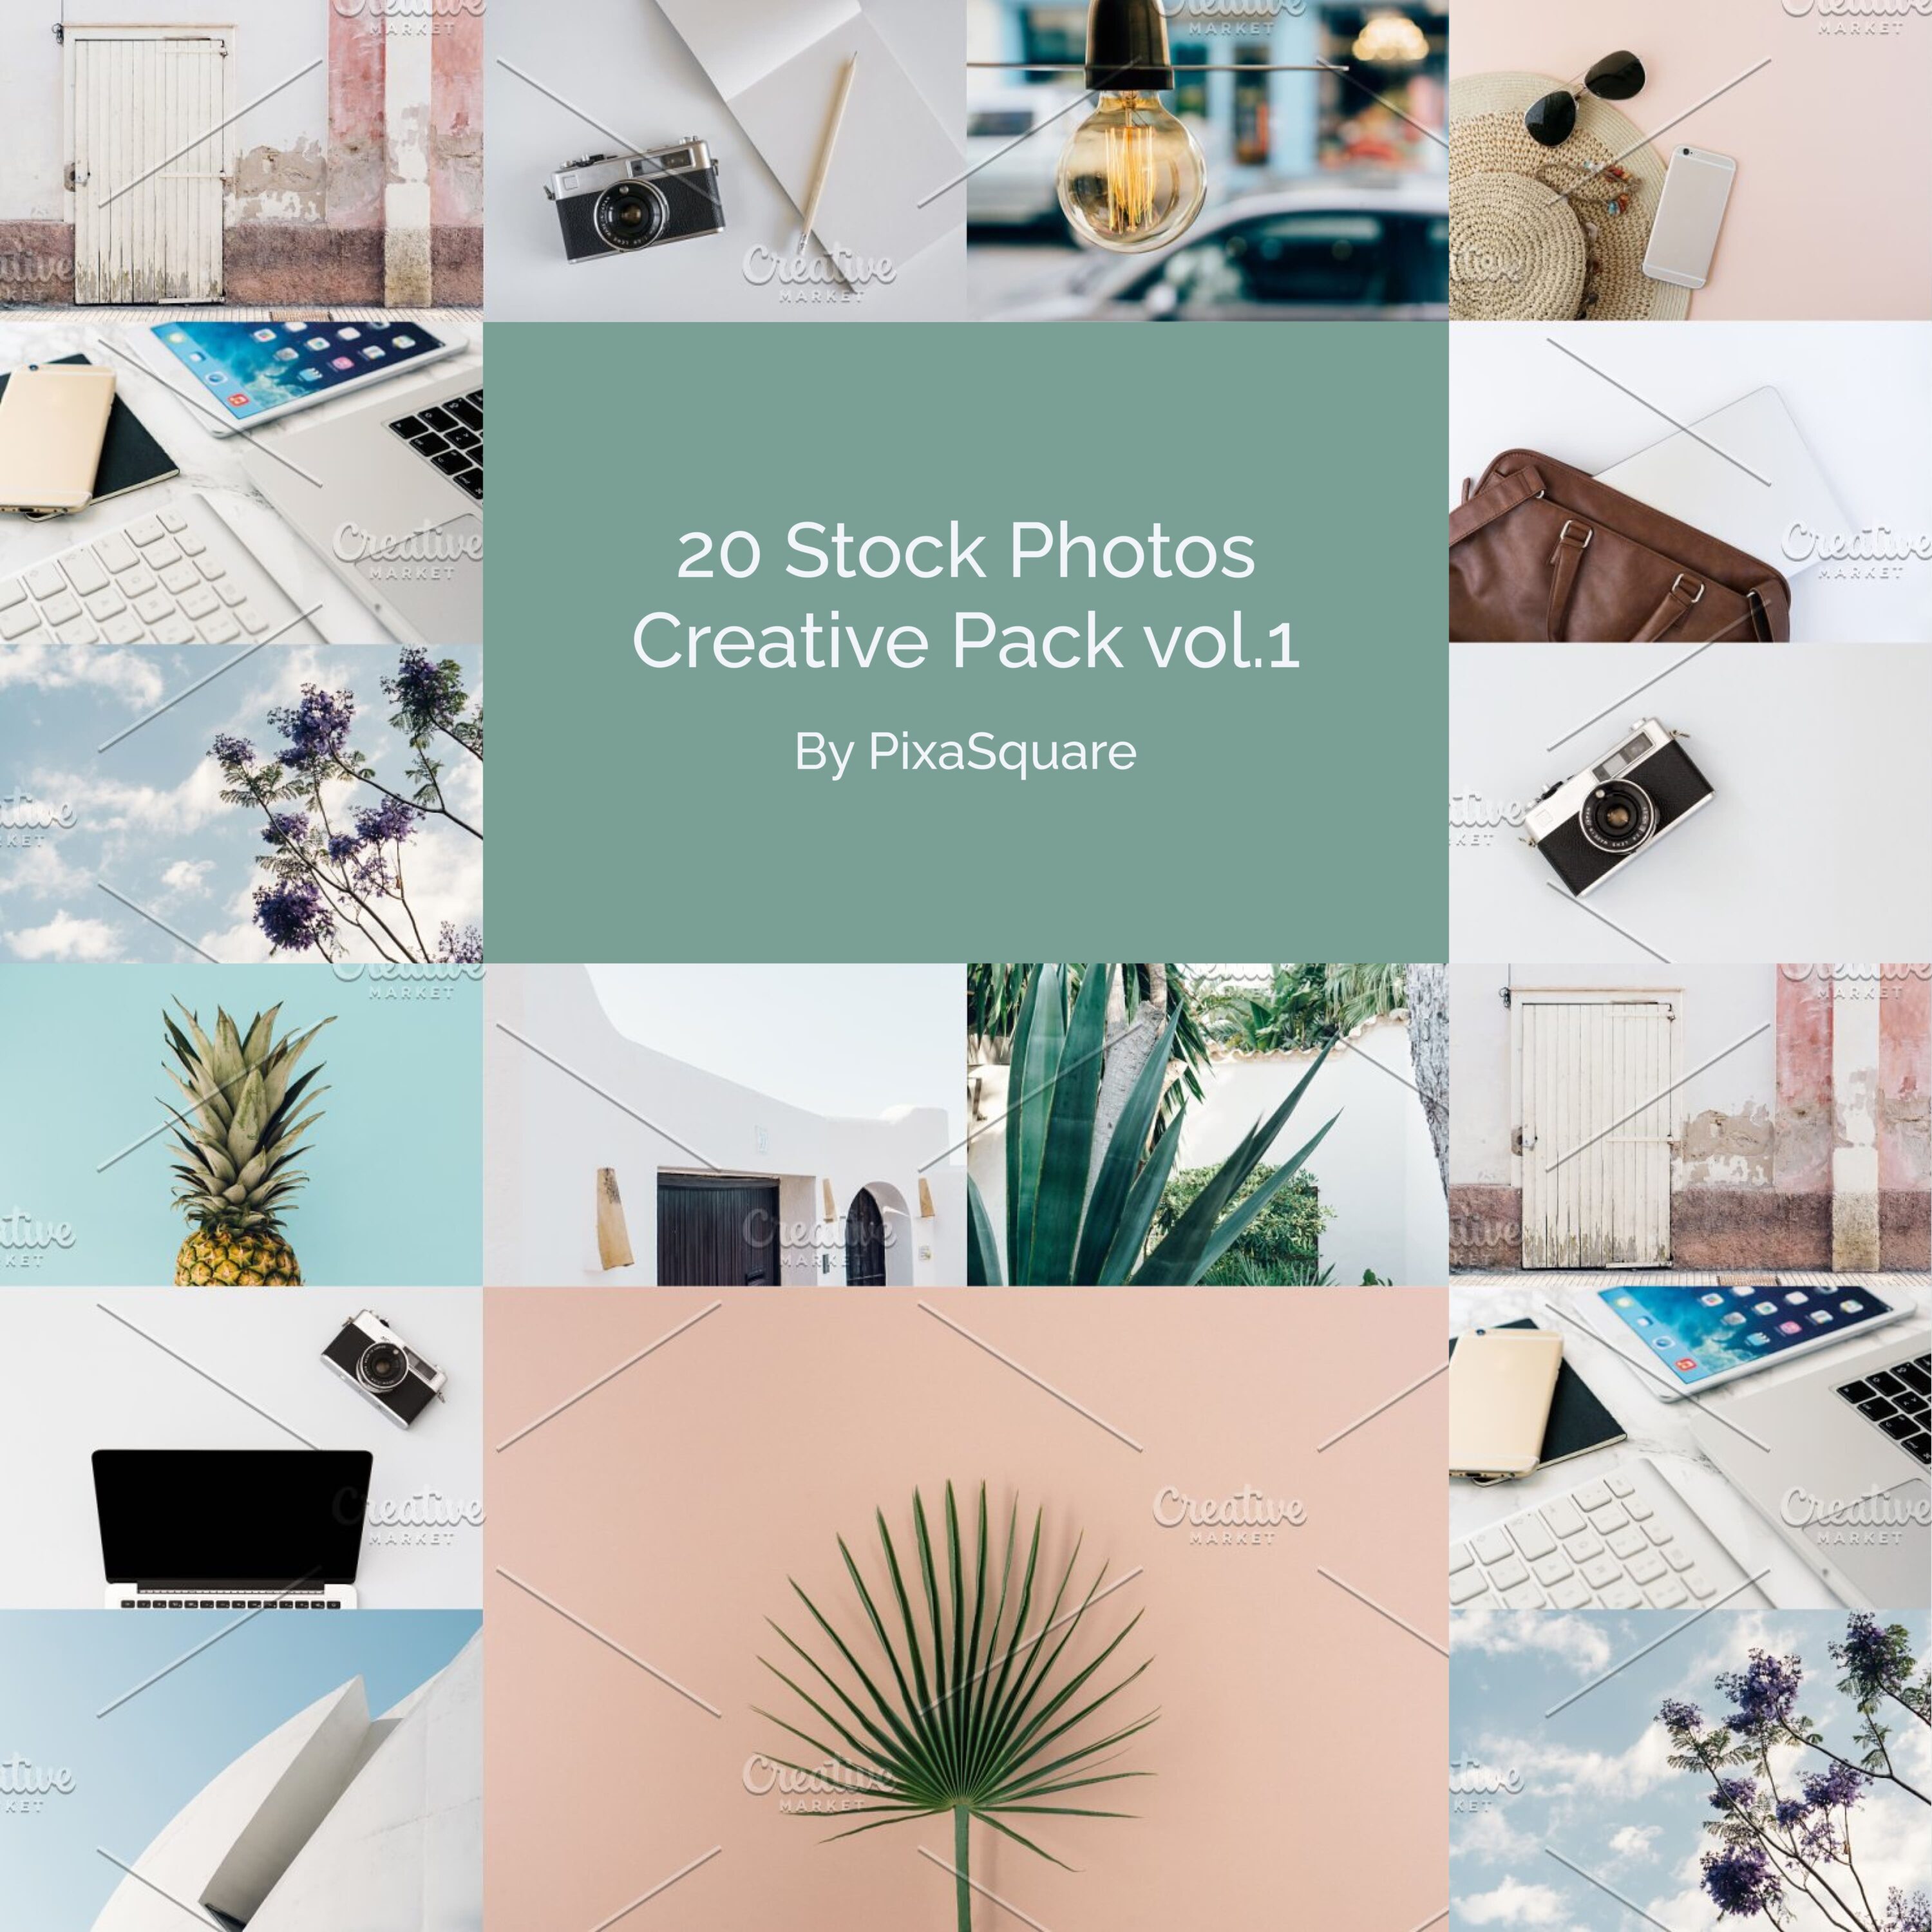 20 Stock Photos Creative Pack Vol.1.